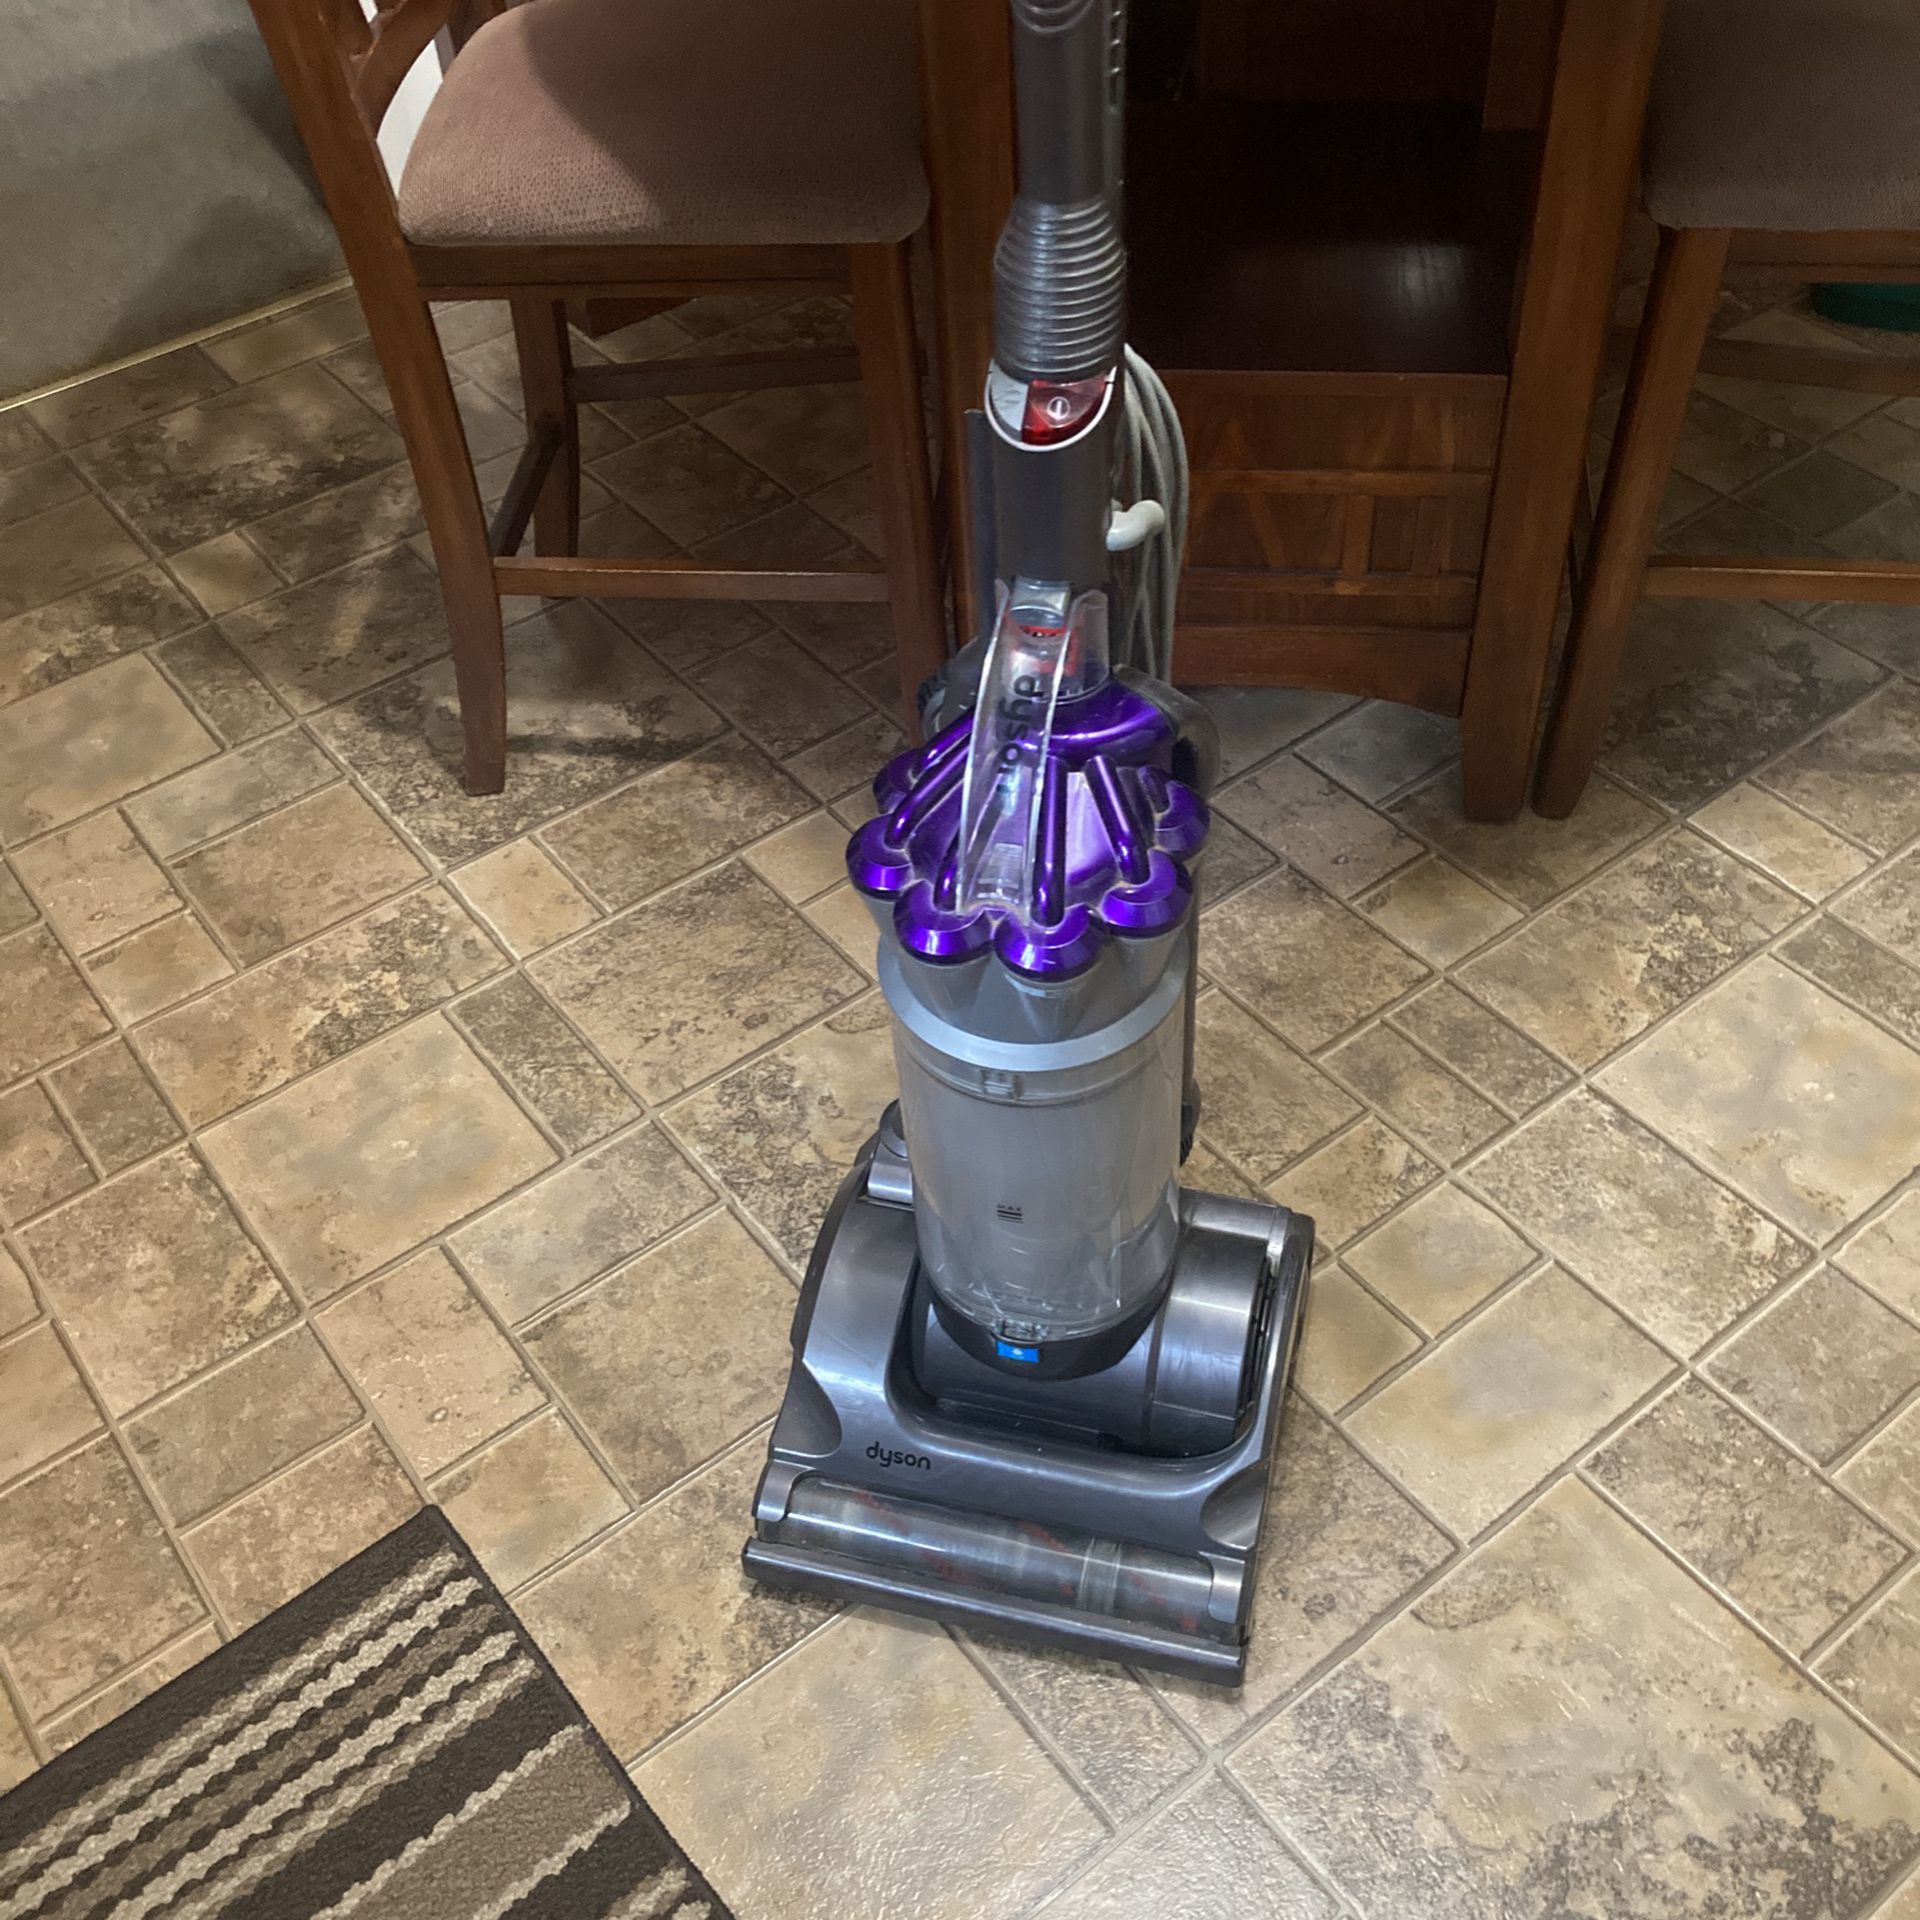 Dyson Vacuum Cleaner. I